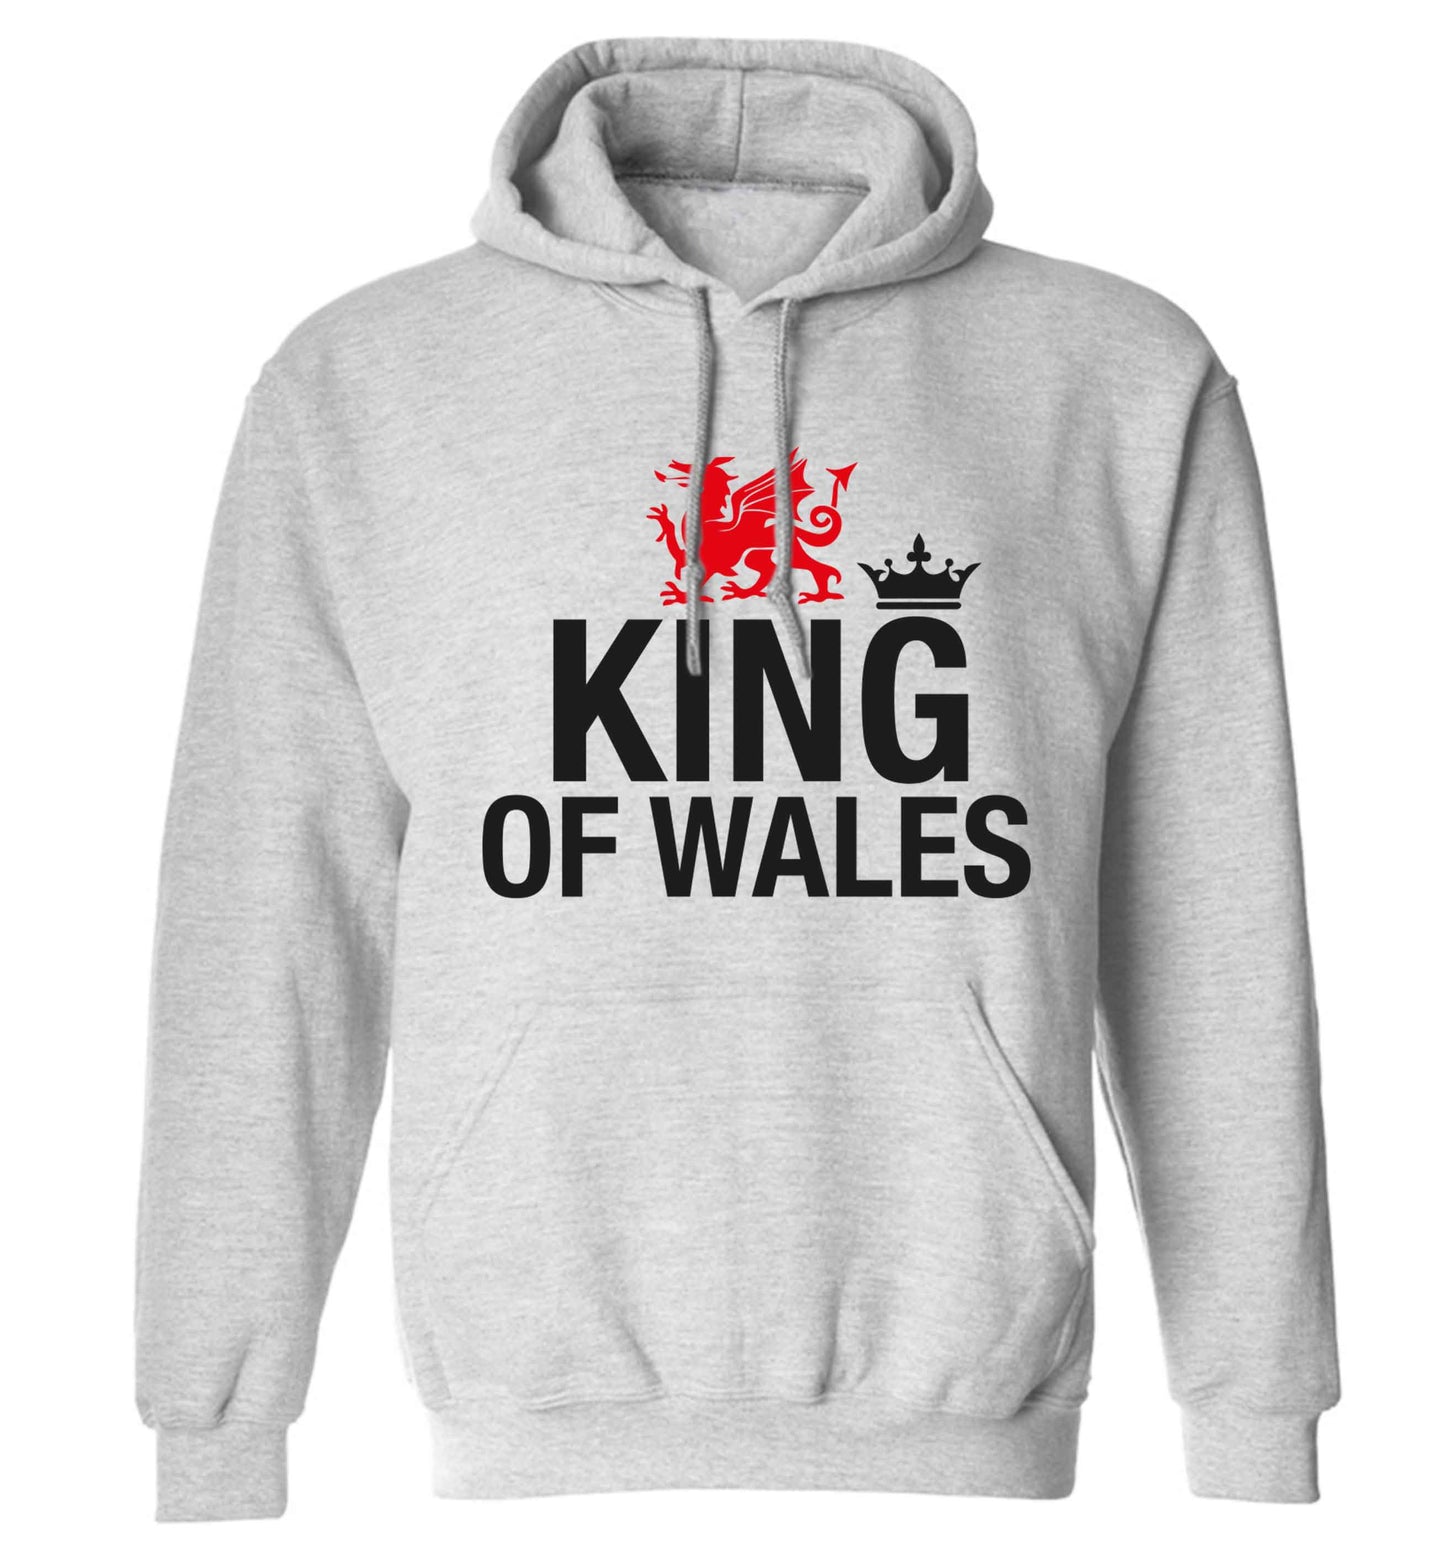 King of Wales adults unisex grey hoodie 2XL